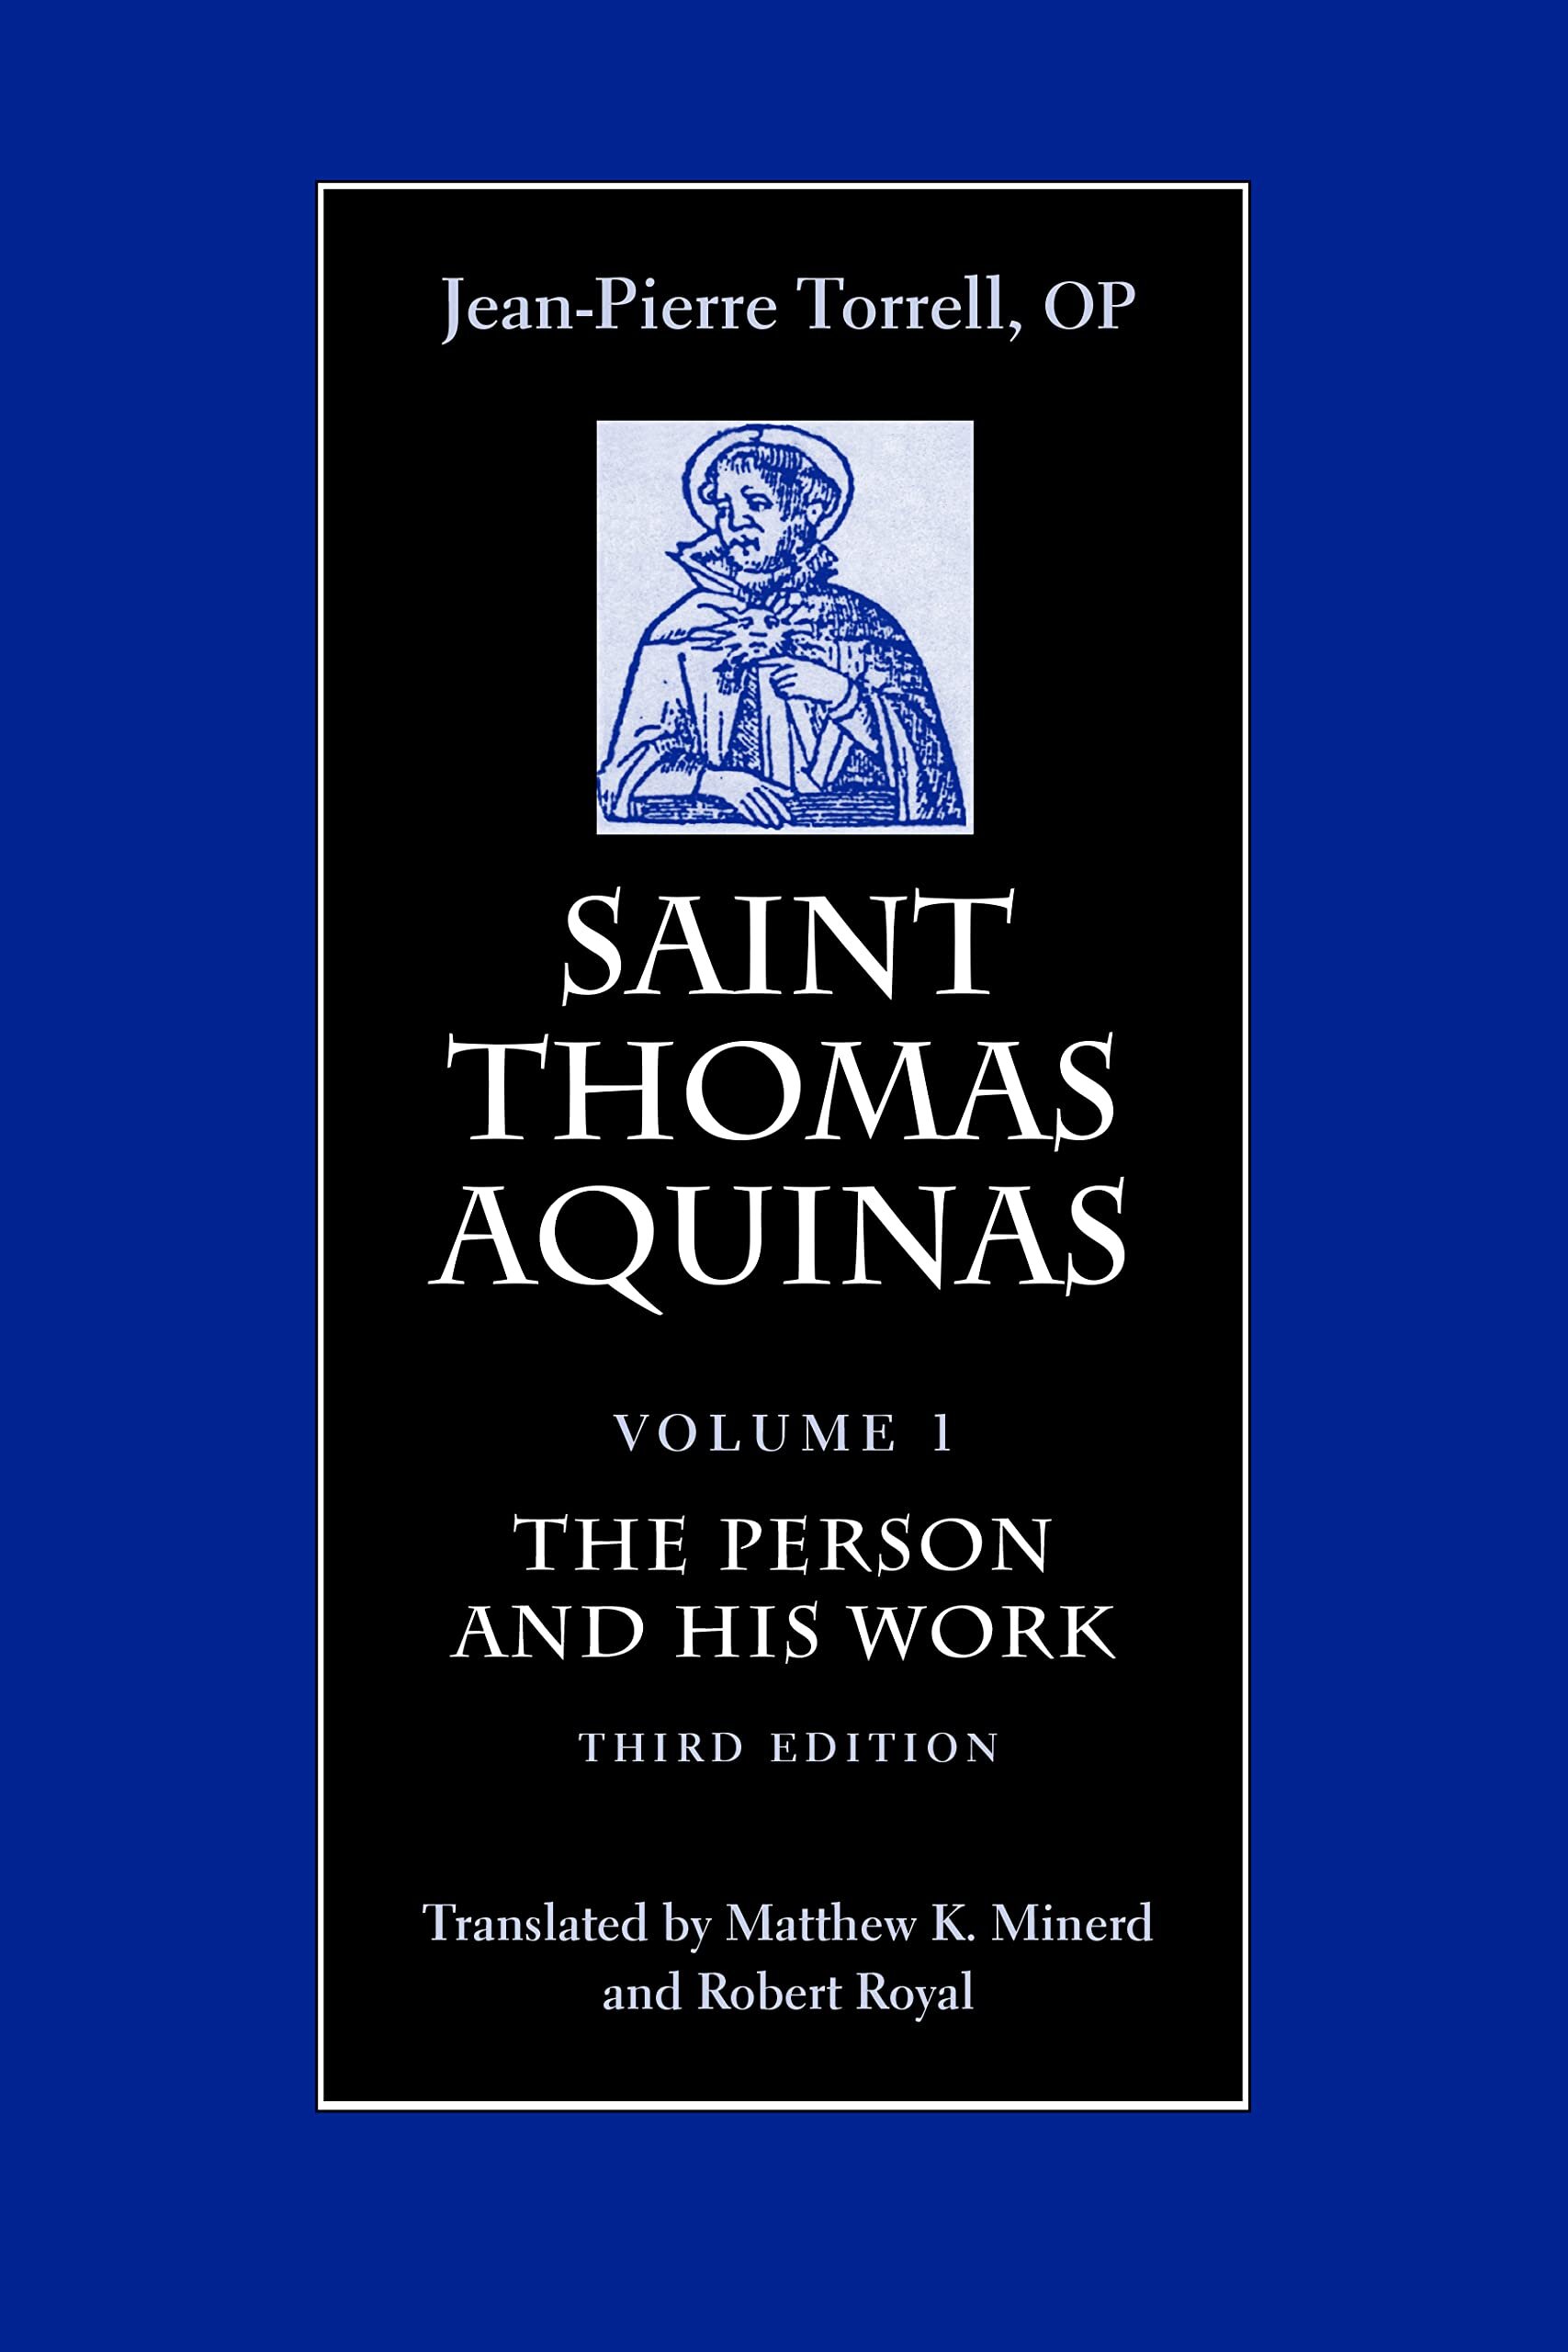 Saint Thomas Aquinas: The Person and His Work, 3rd ed. (St. Thomas Aquinas In Translation, vol. 1)